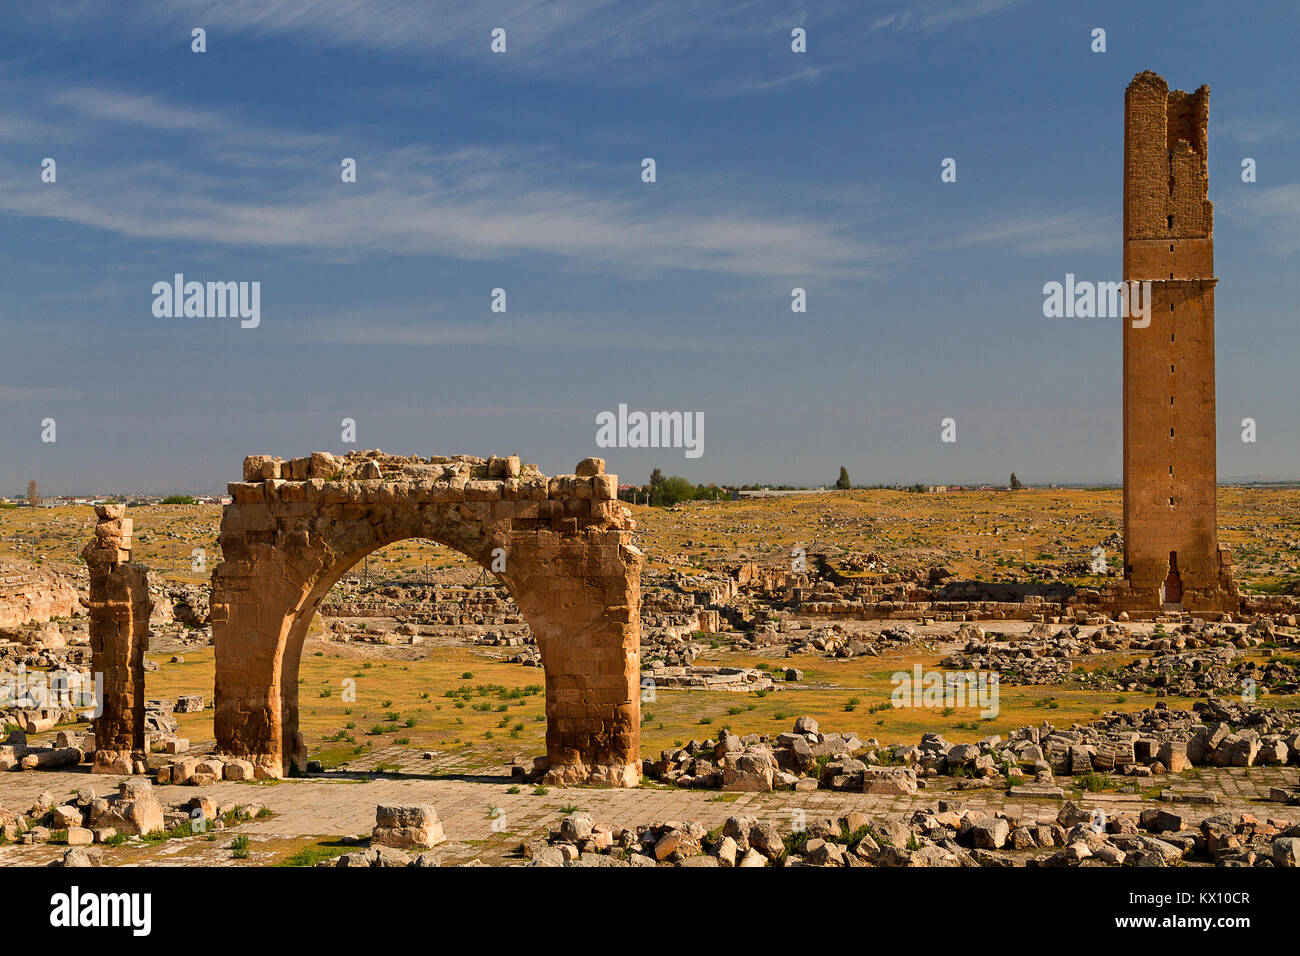 Ruins of the ancient city of Harran in upper mesopotamia, near the province of Sanliurfa in Turkey. Stock Photo